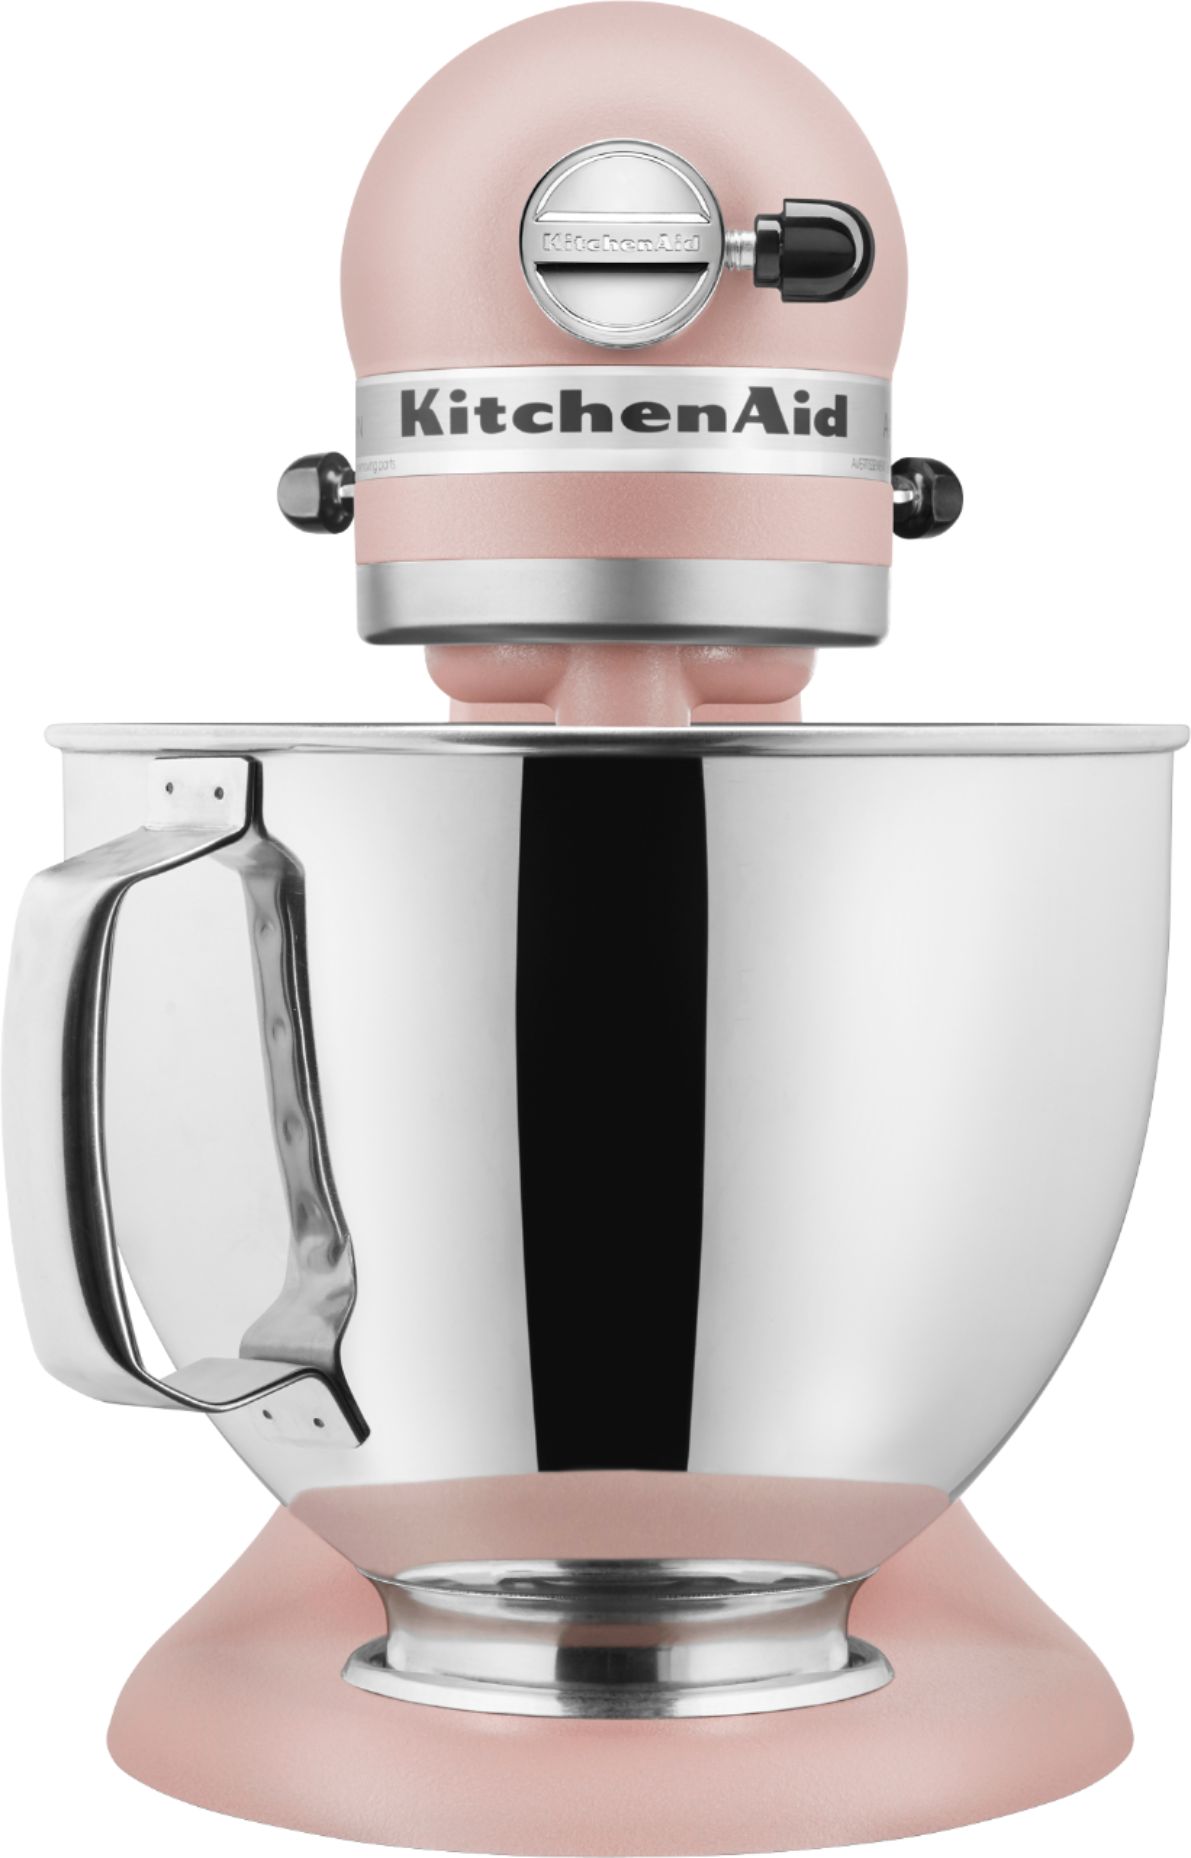 KitchenAid KSM100PSTCB Ultra Power Plus Tilt-Head Stand Mixer Flamingo Pink